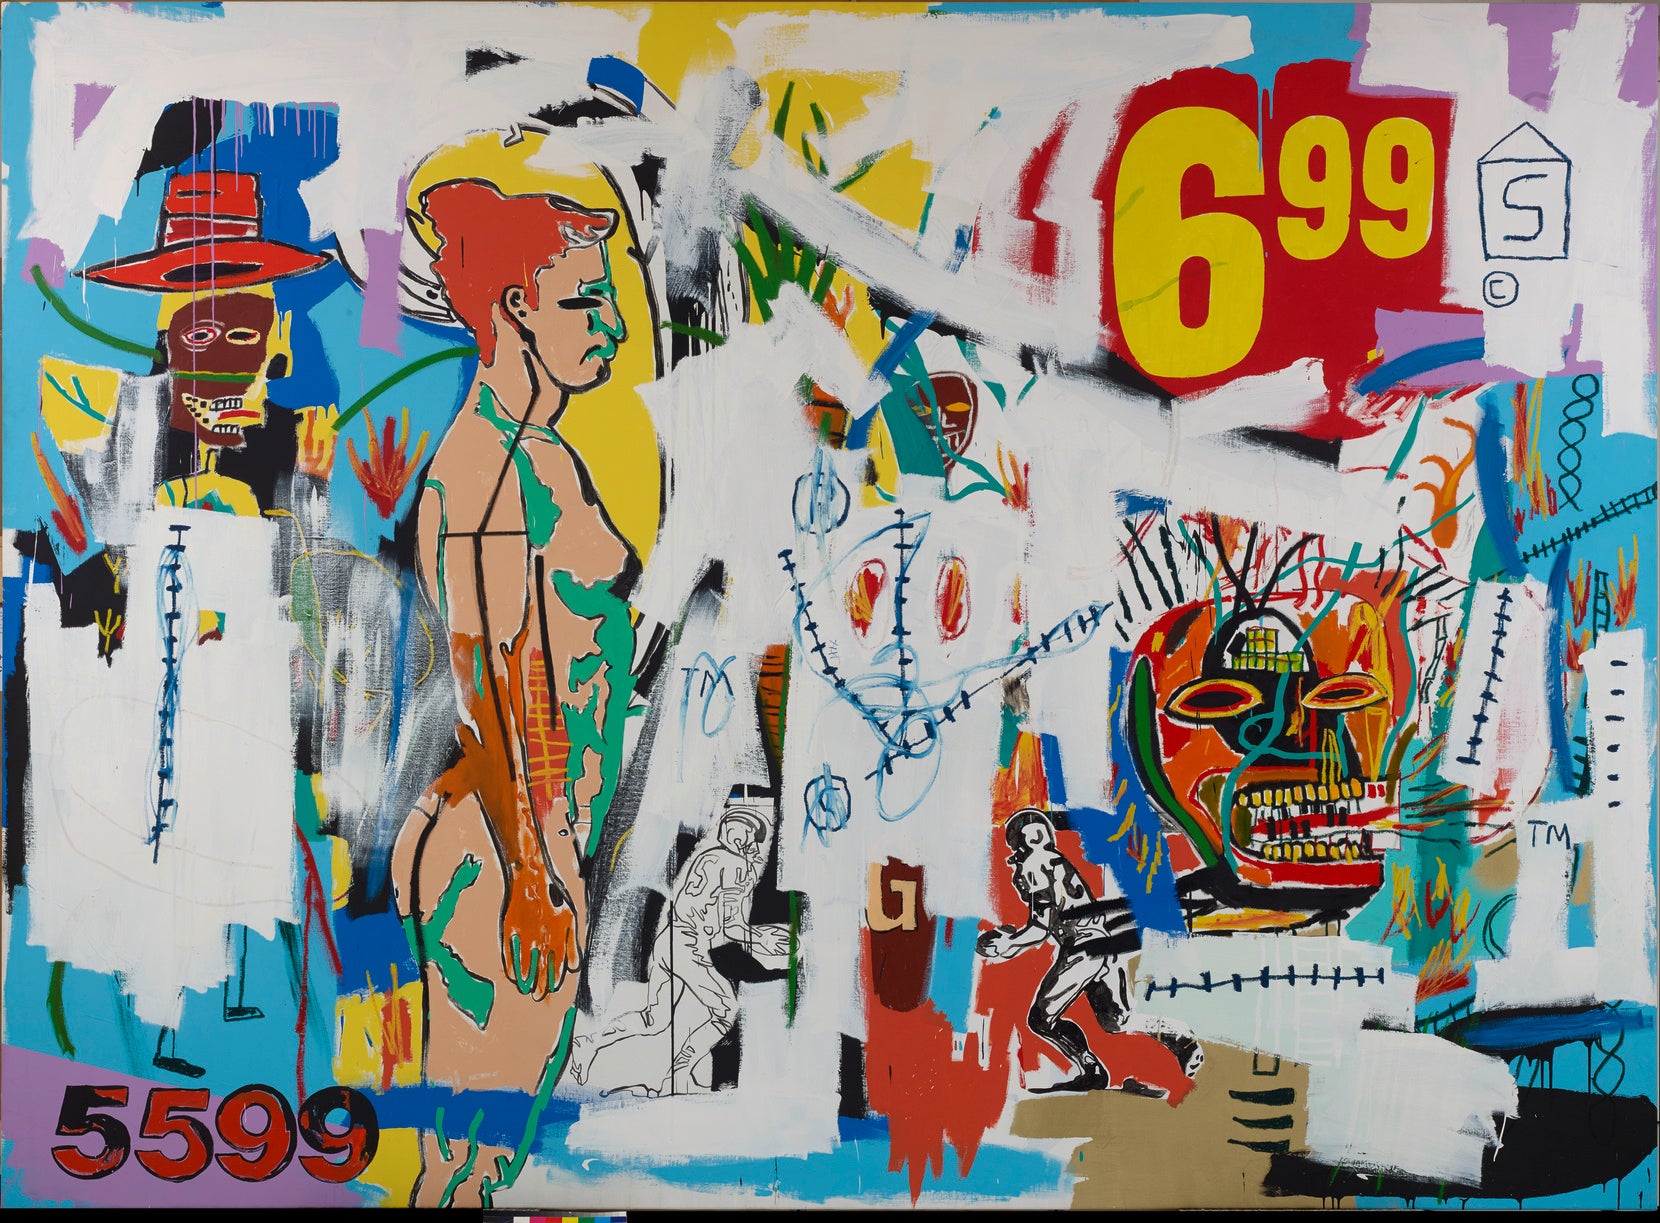 Jean-Michel Basquiat, Andy Warhol, 6.99, 1985